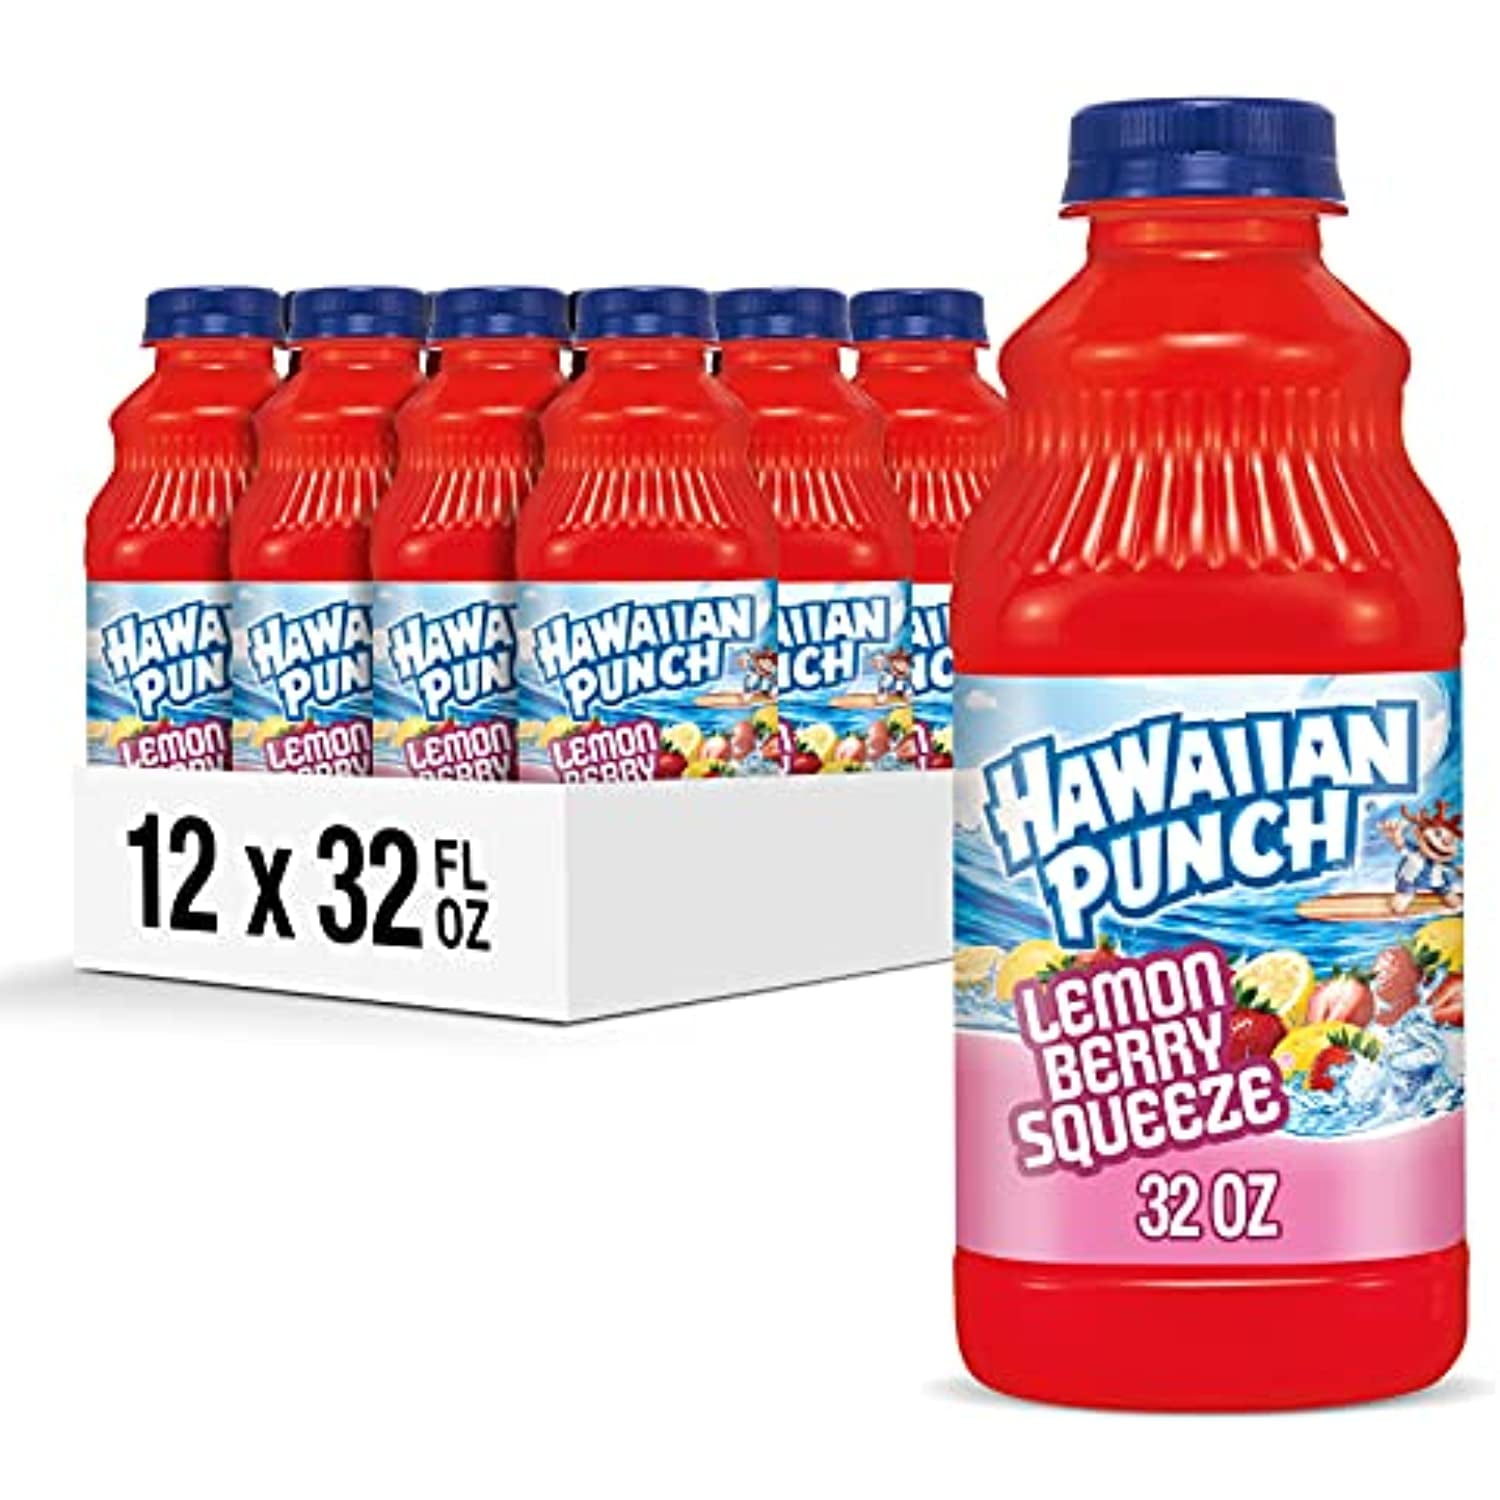 Hawaiian Punch Lemon Berry Squeeze 32 Fl Oz Bottles Pack Of 12 3438